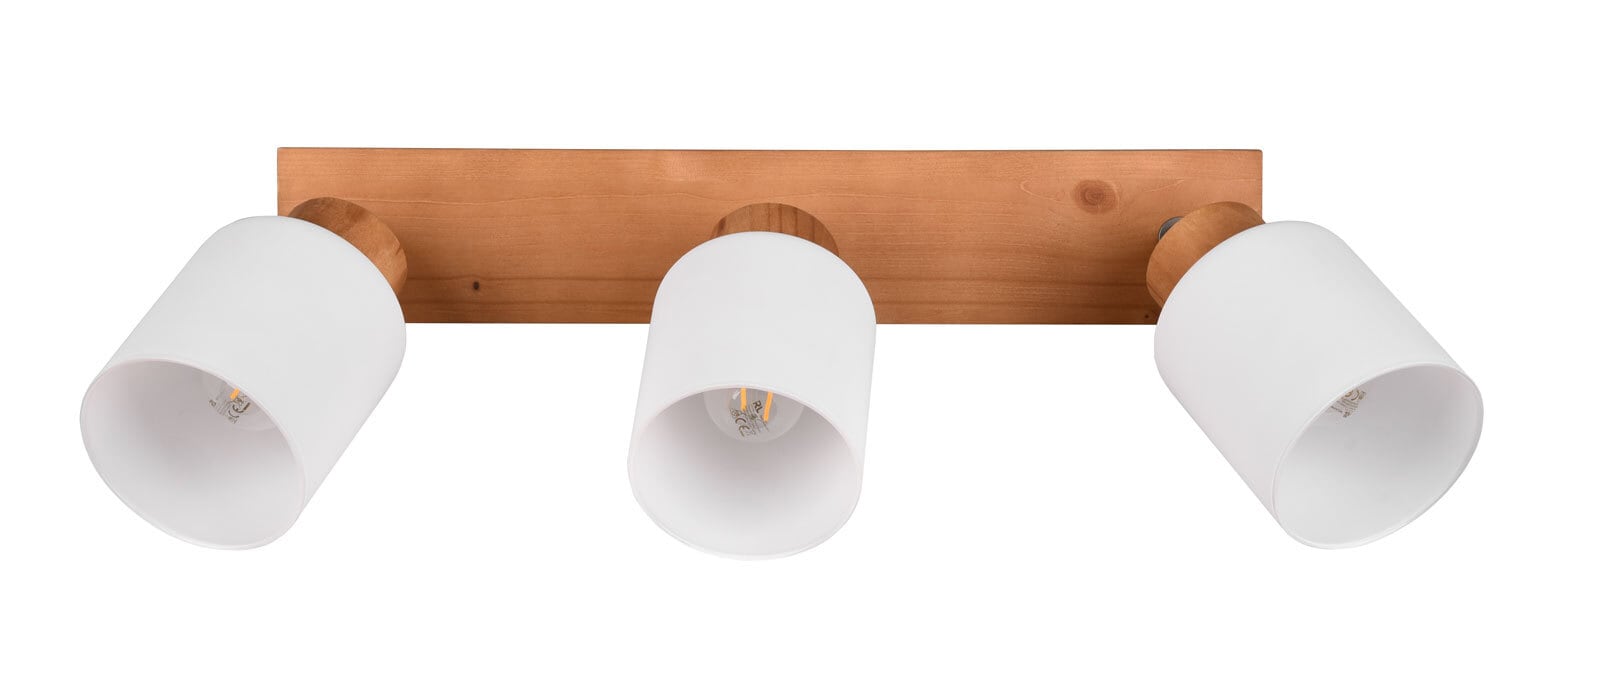 RL Retrofit Deckenlampe mit 3 Spots ASSAM Holz naturfarbig